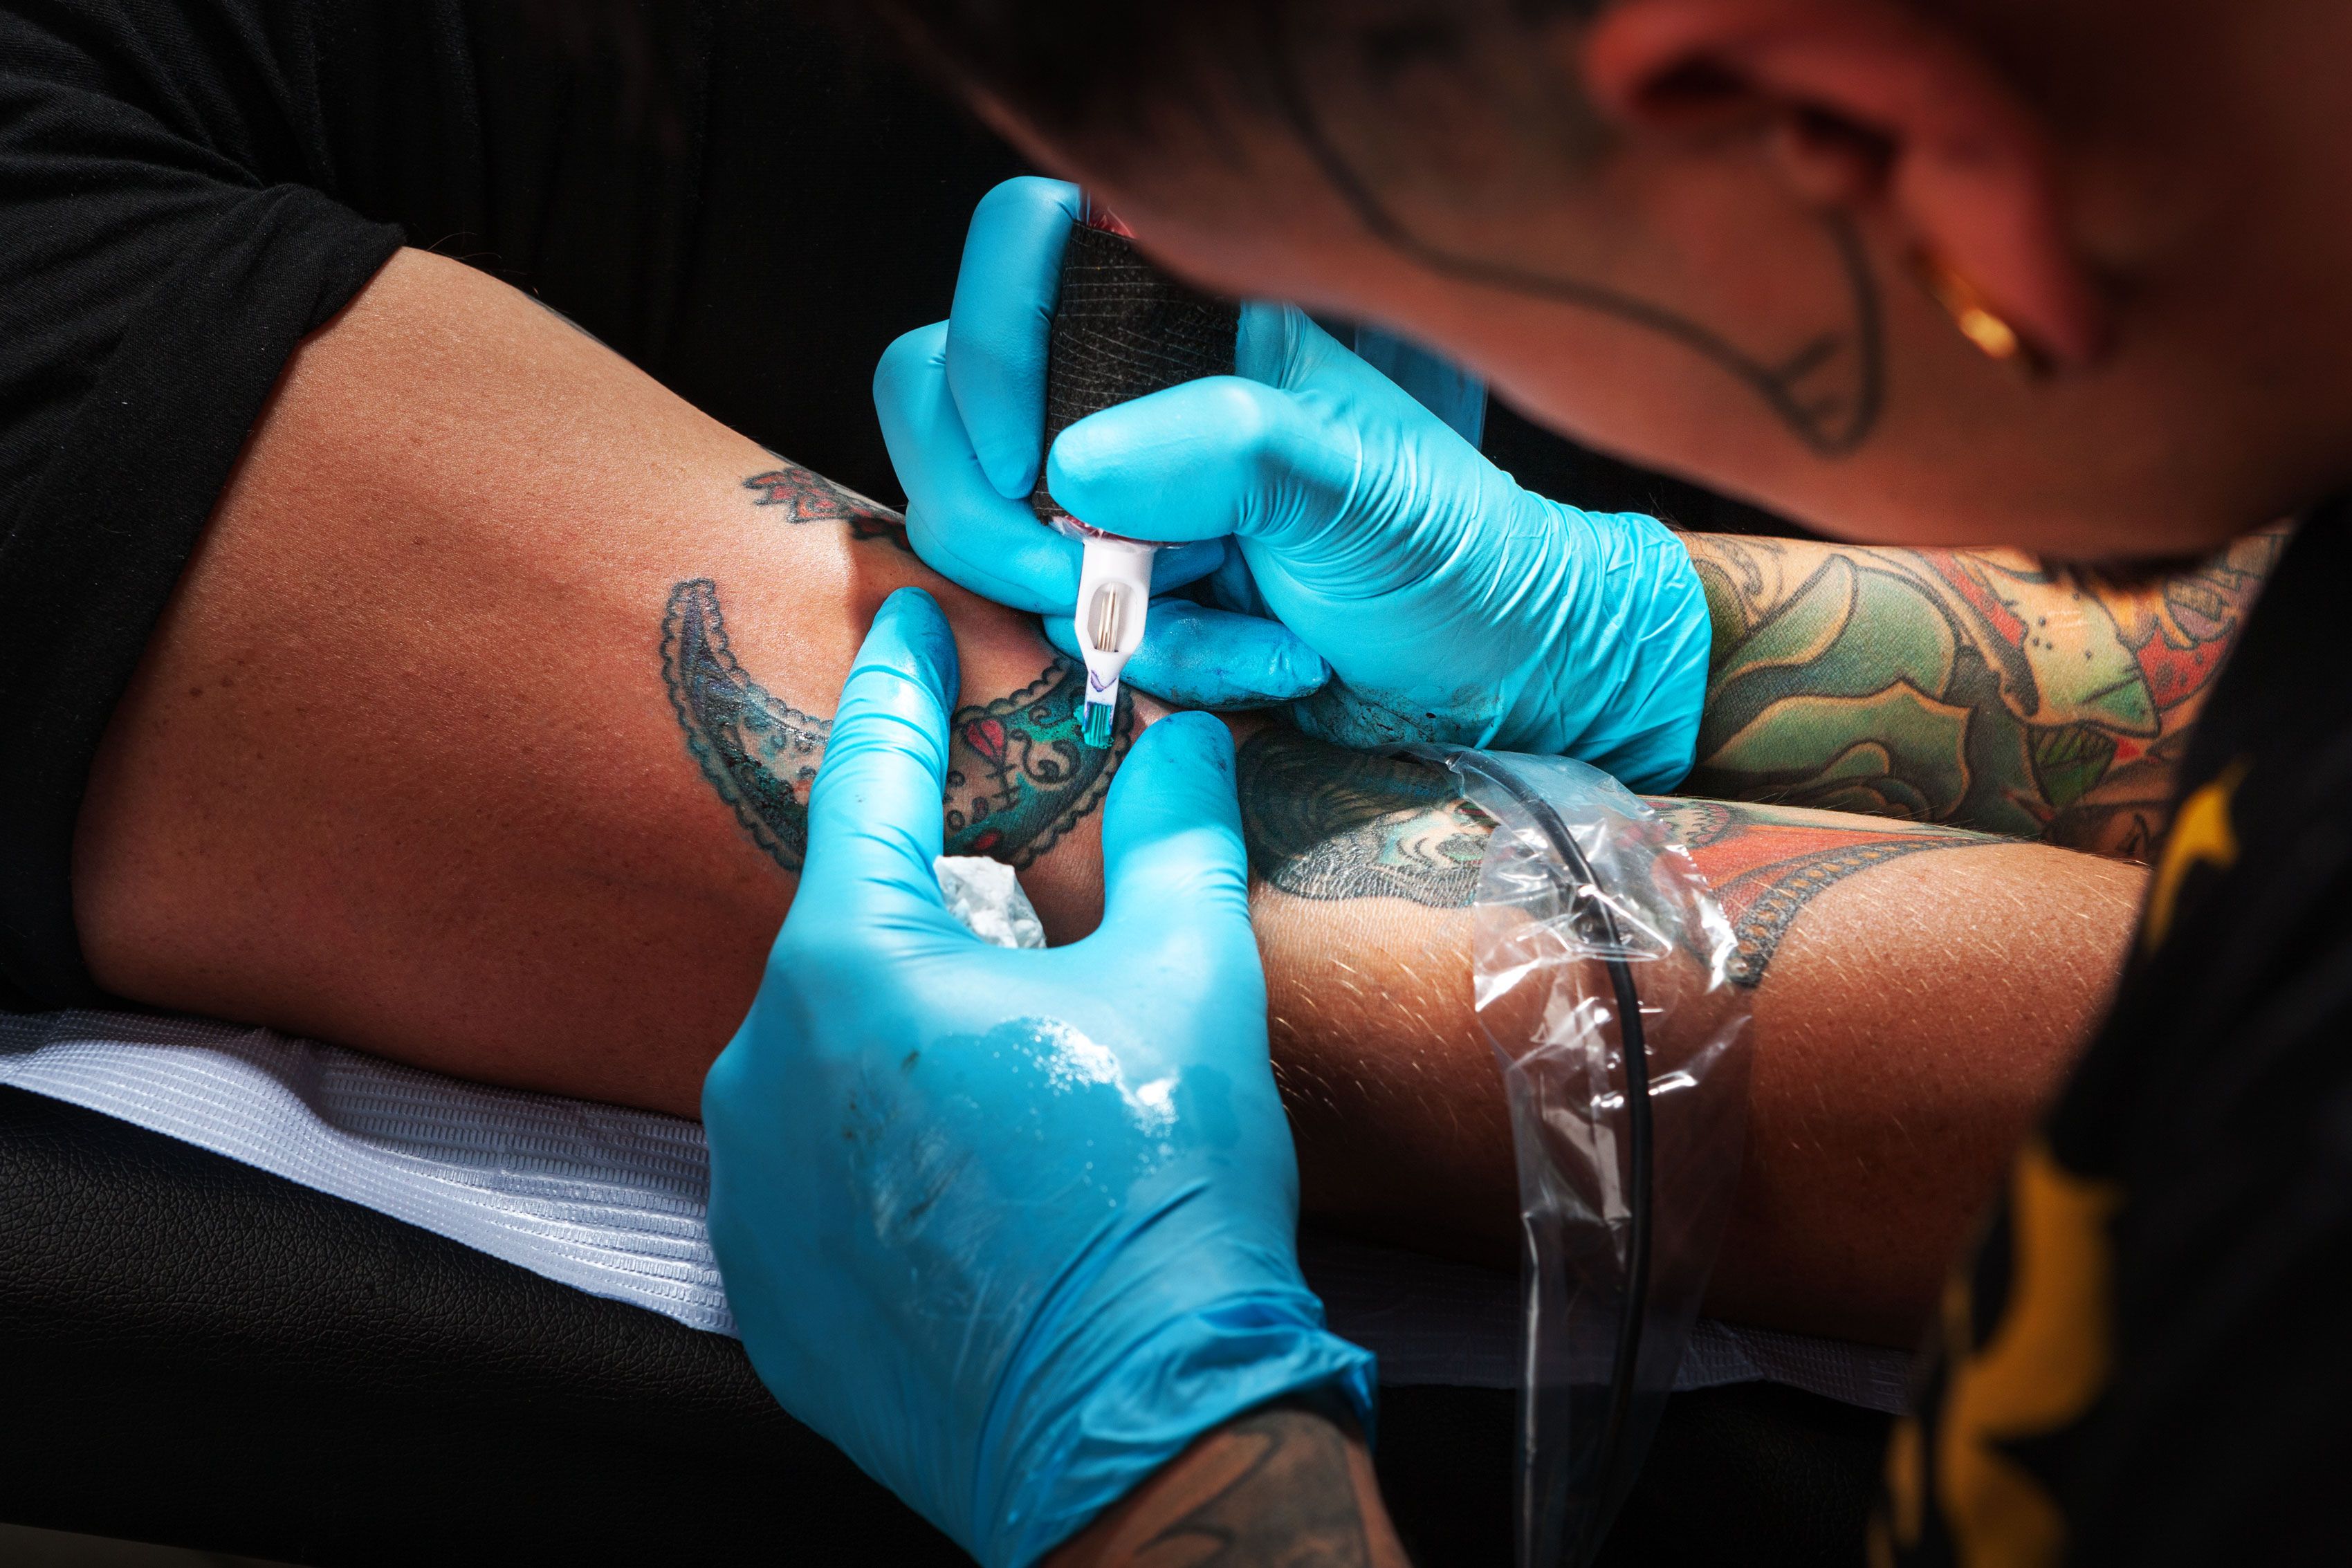 Tattoo Rash: Pimple, Allergy Symptom, or Infection? Plus Treatment